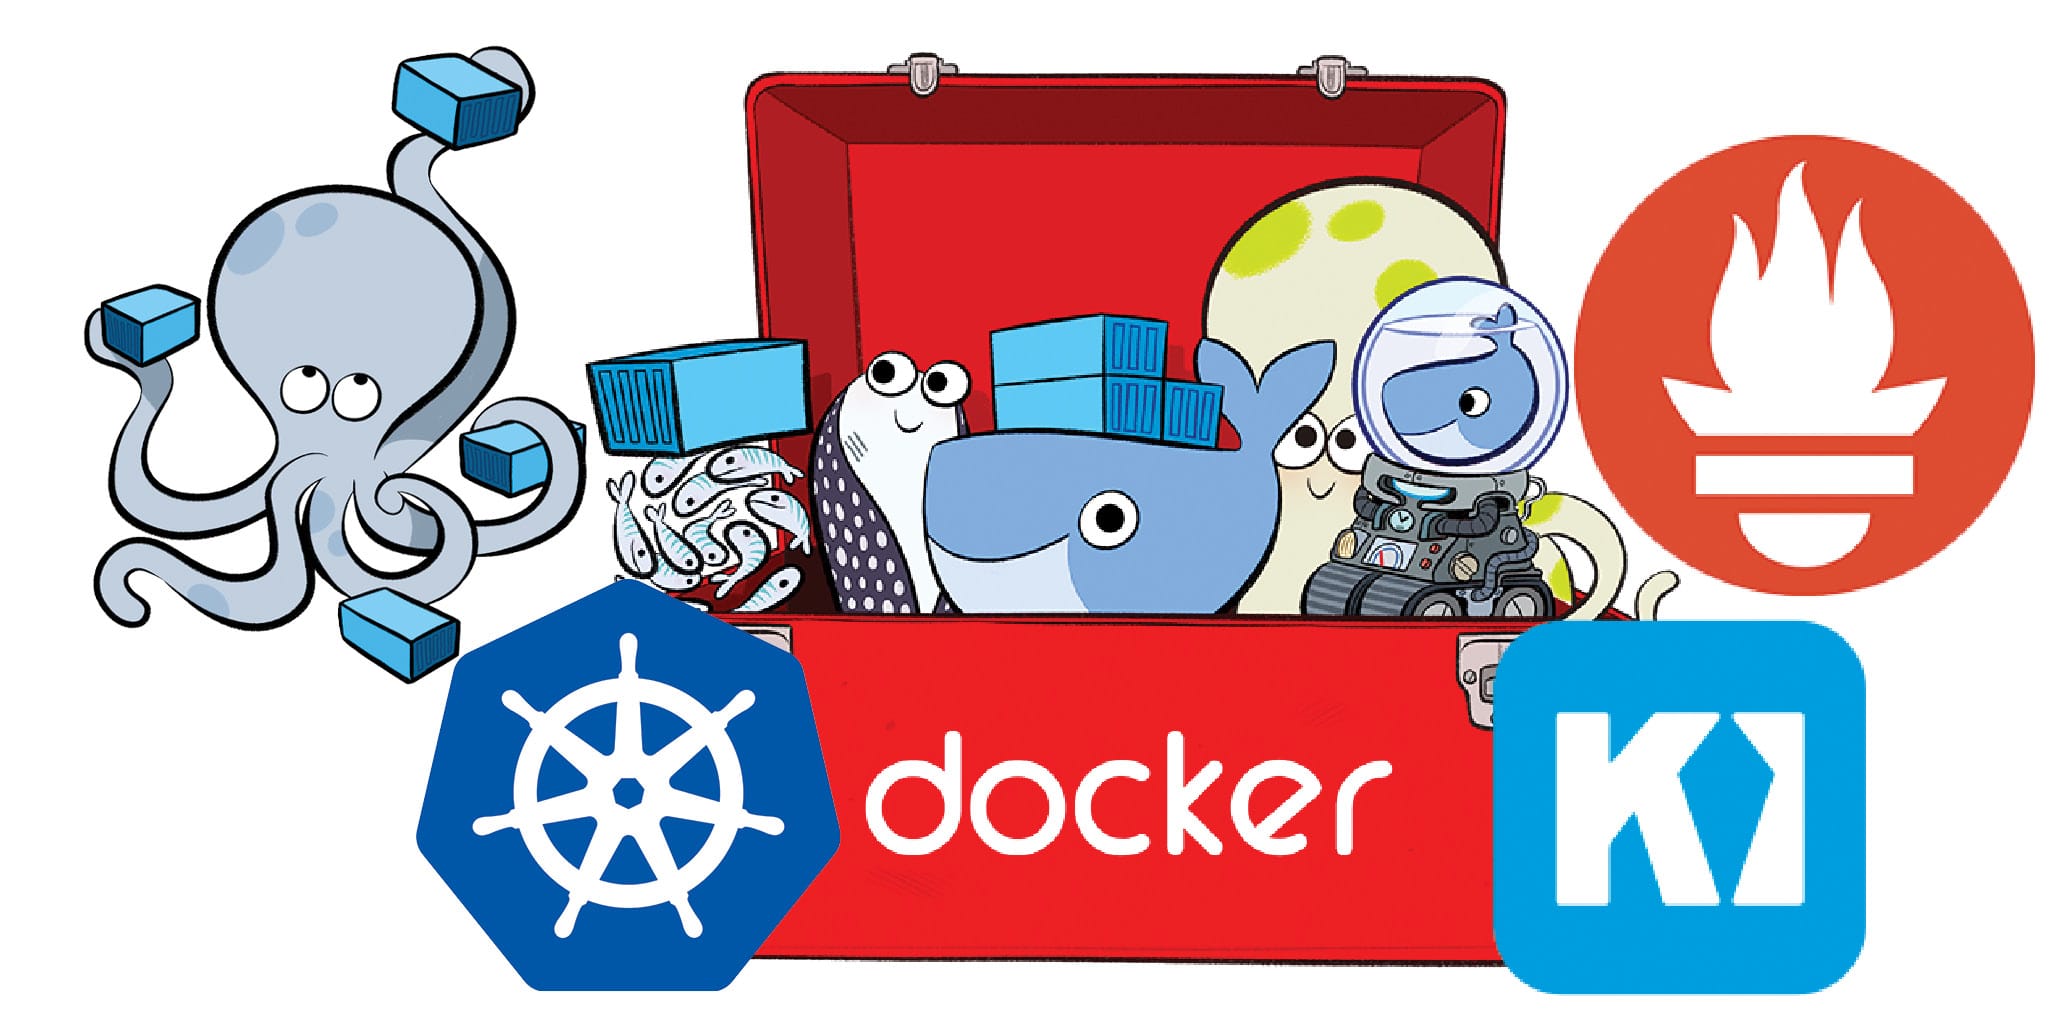 Docker backup. Docker Toolbox. Докер клипарт.